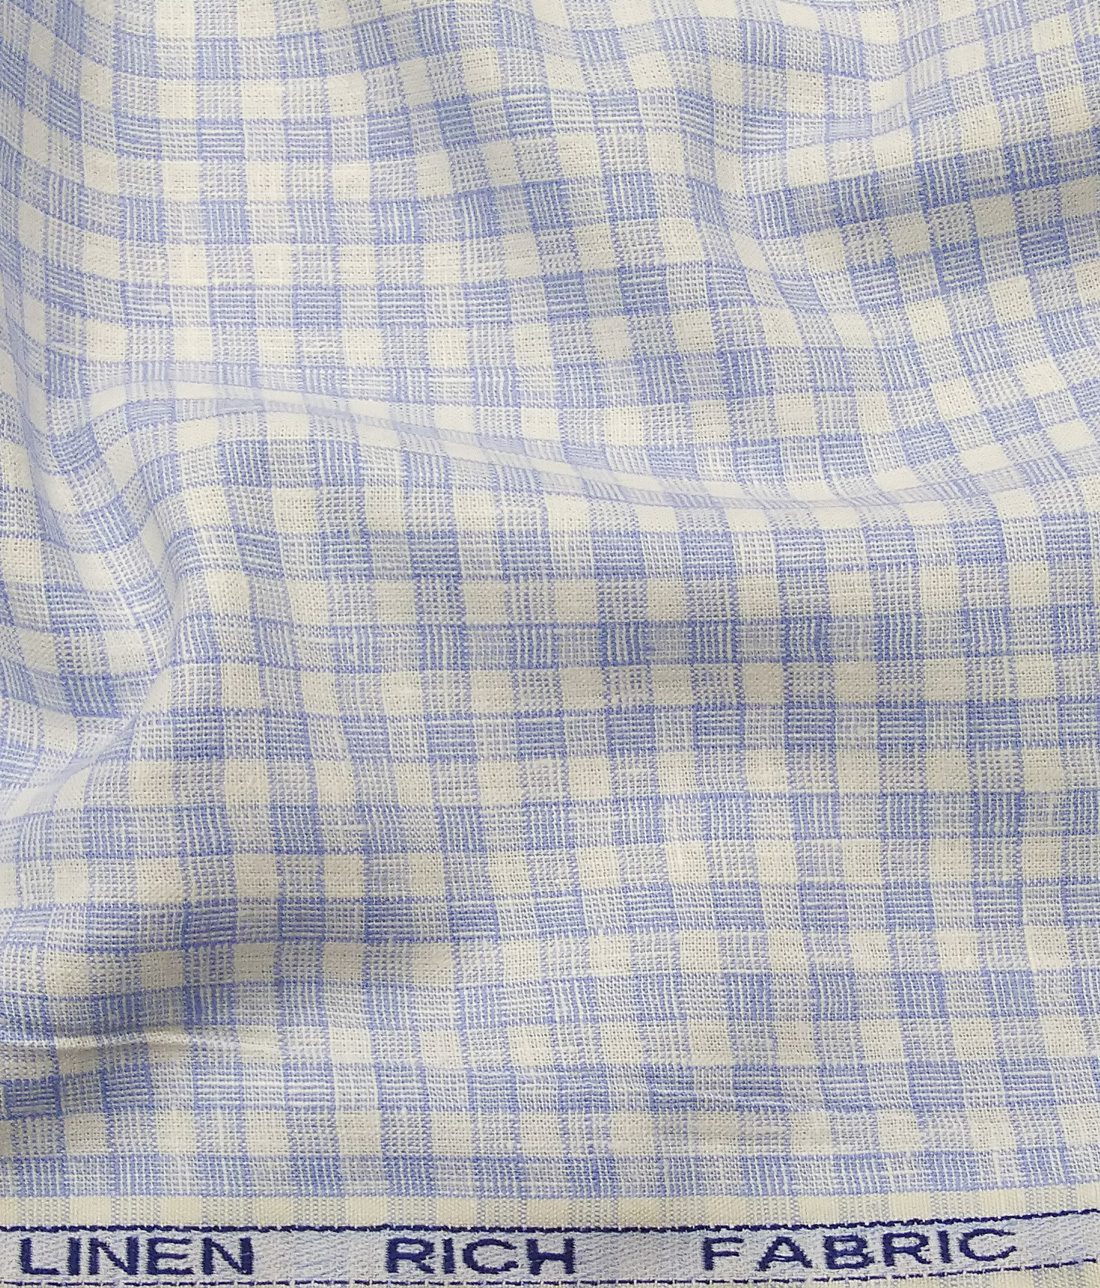 Mazury by Aditya Birla Group Men's Linen Cotton Blue Checks Unstitched Shirt Fabric (White